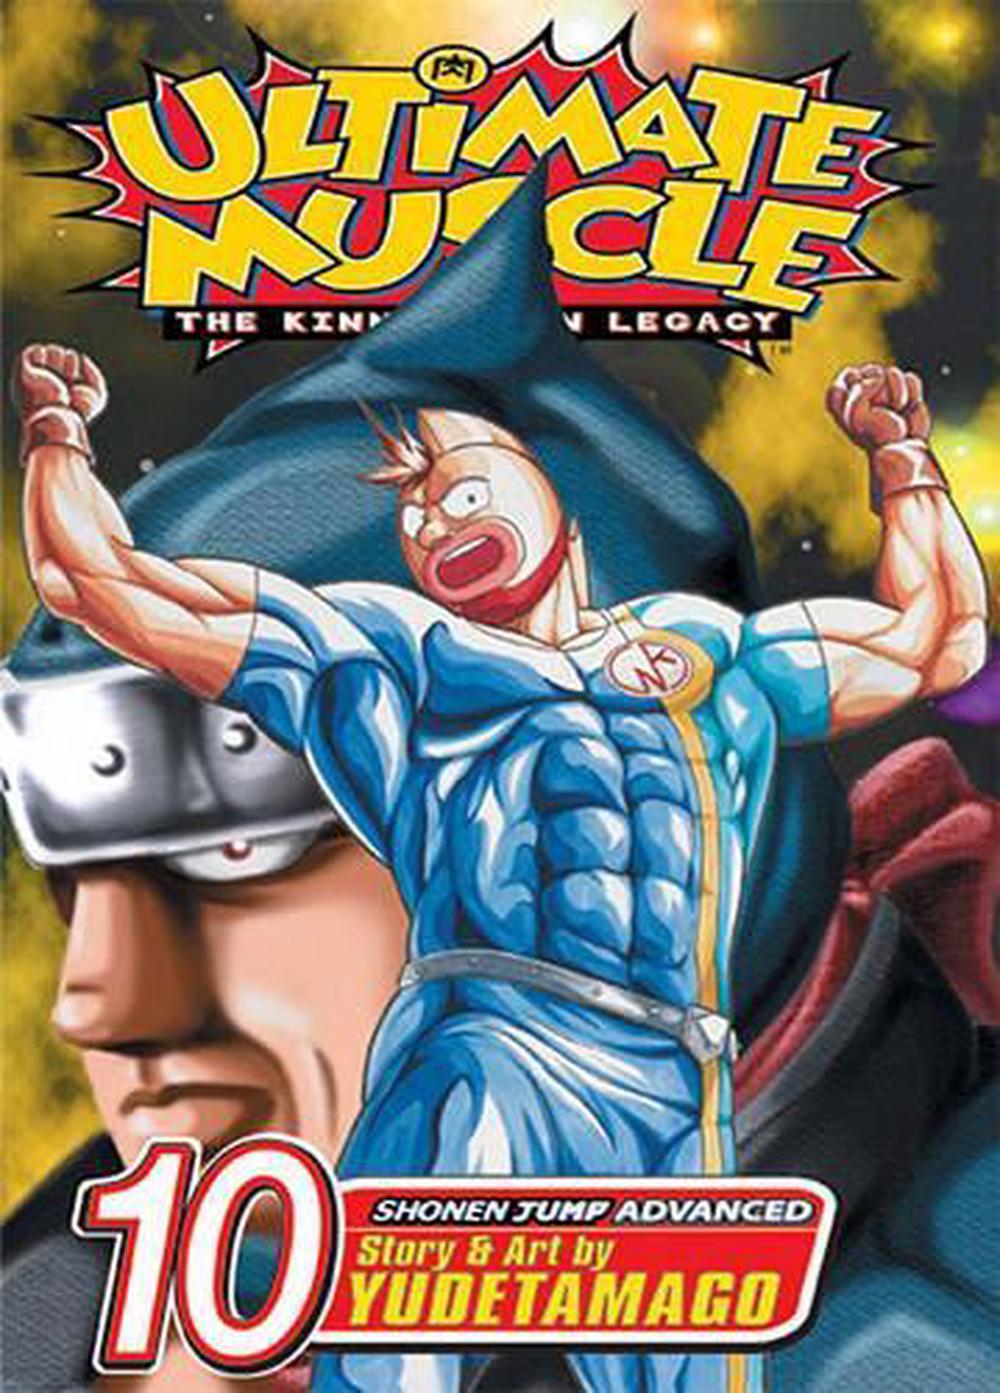 Ultimate Muscle, Volume 1 by Yudetamago